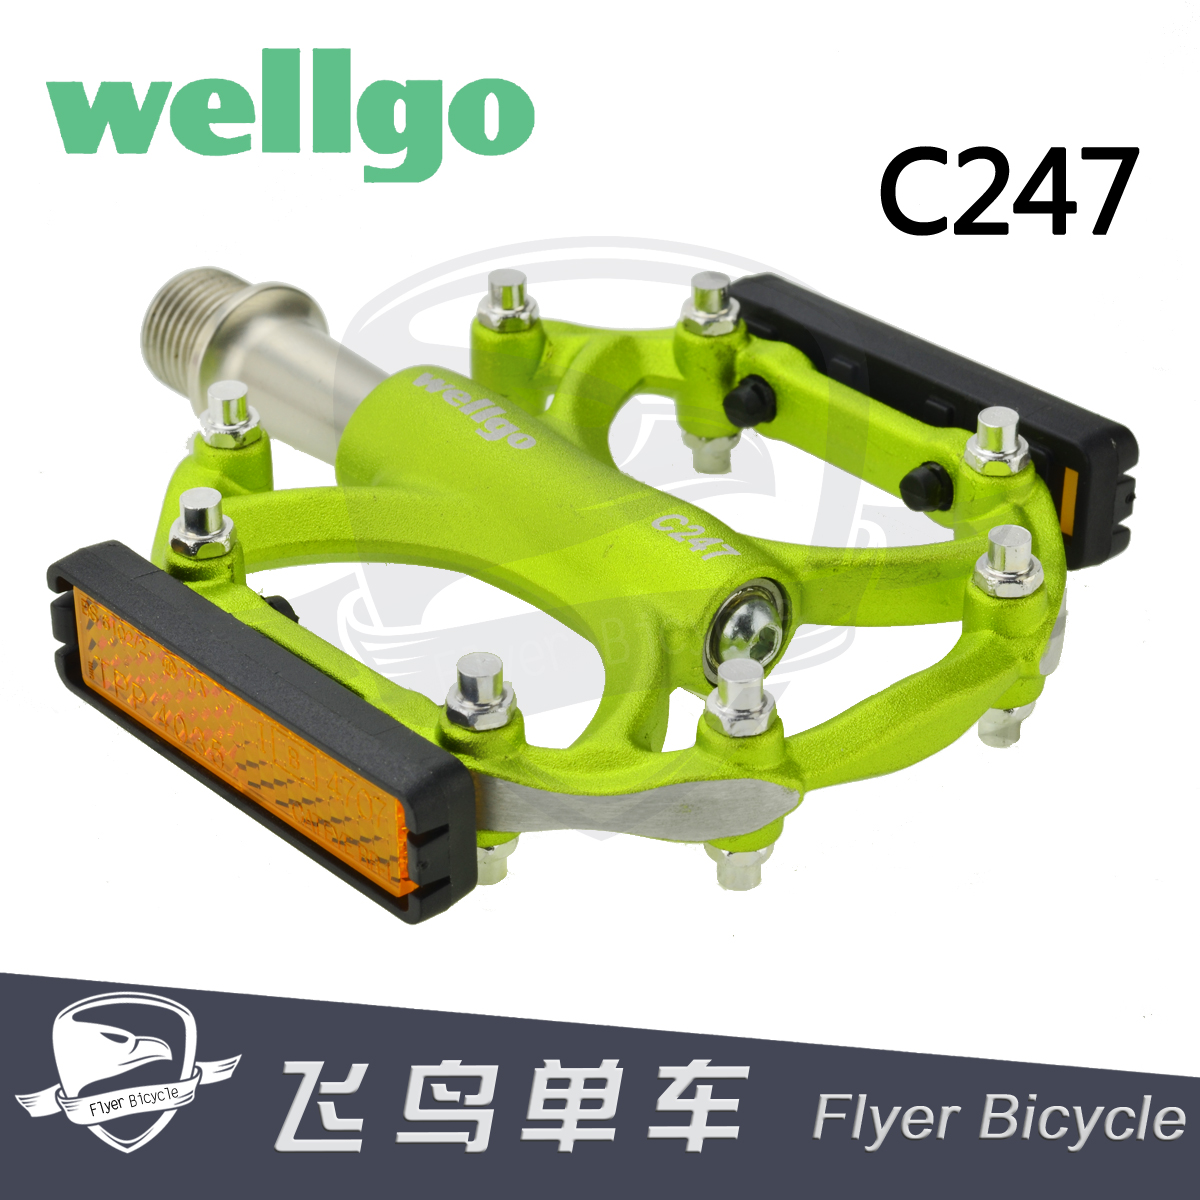 wellgo c247